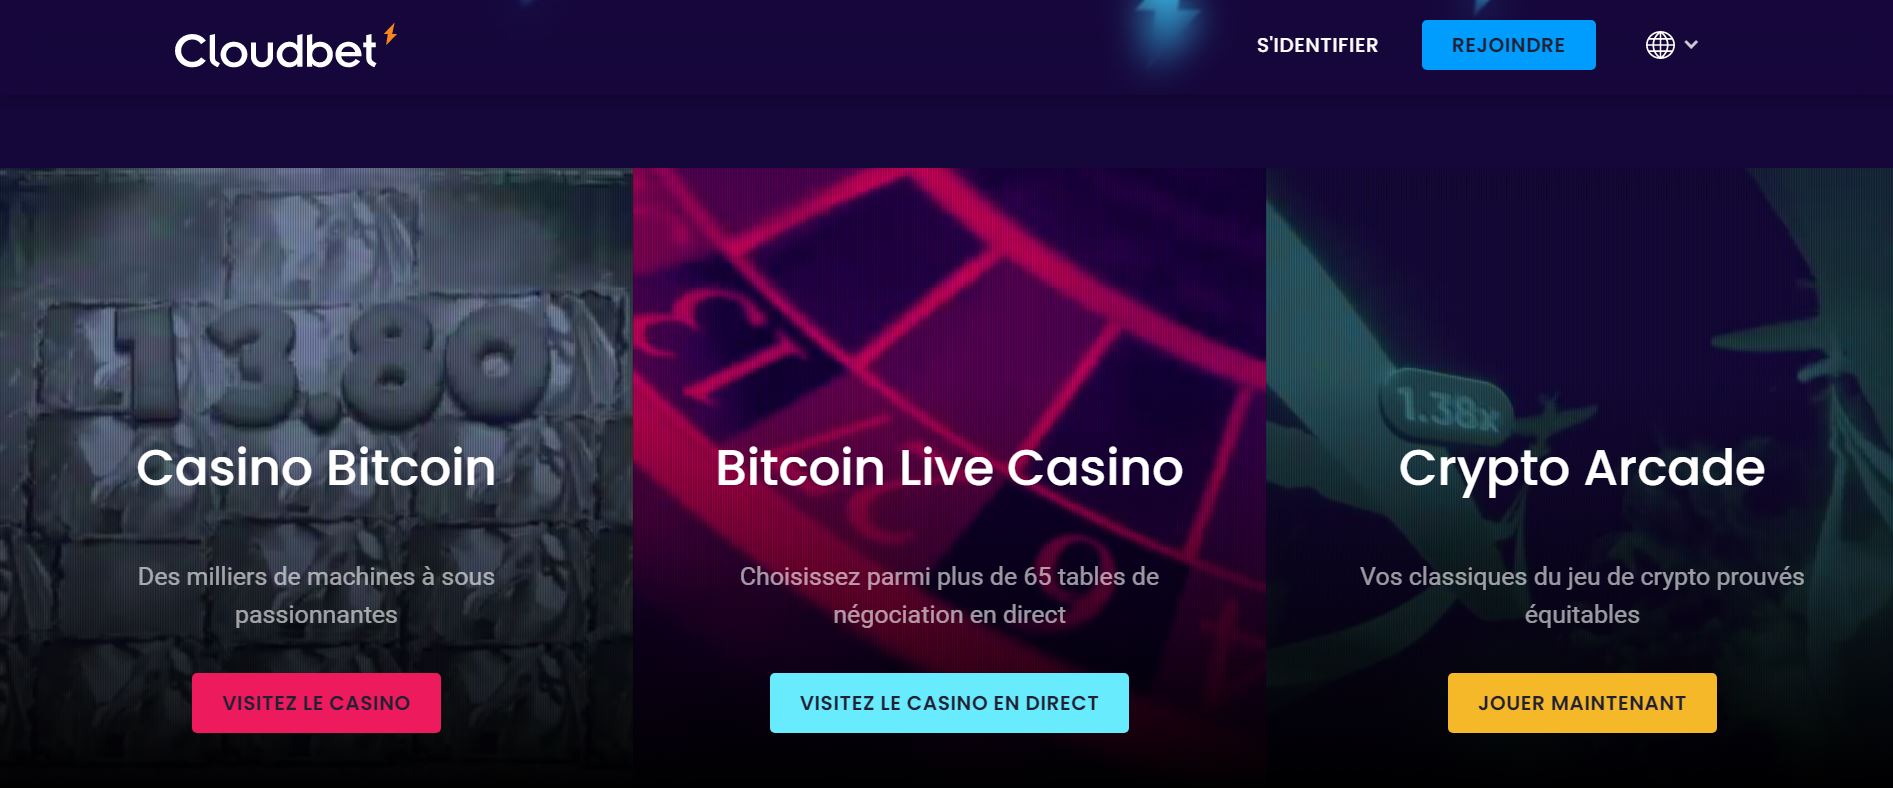 Cloudbet - Casino Bitcoin - Crypto casino